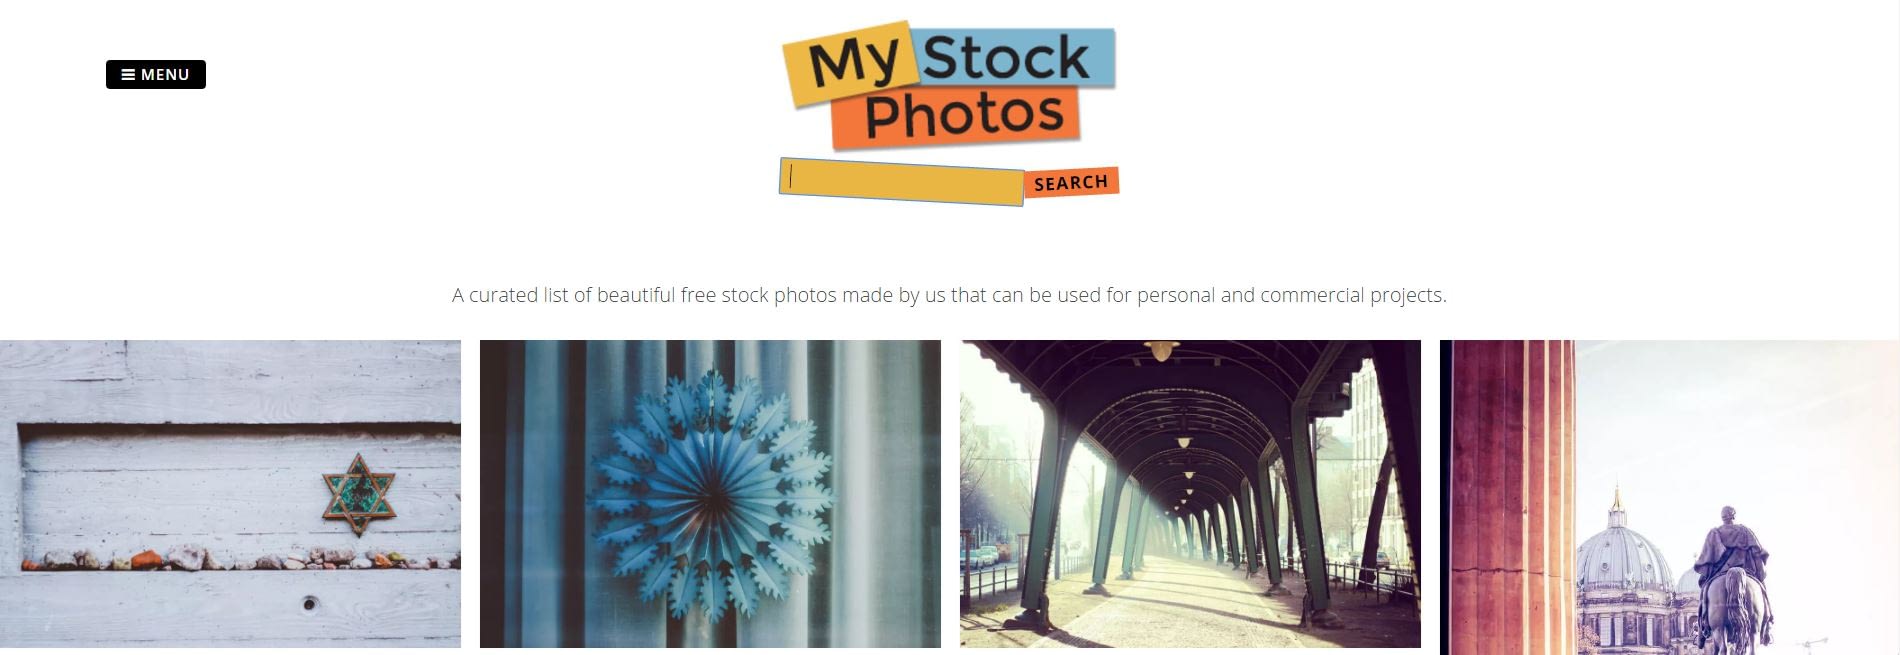 My Stock Photos